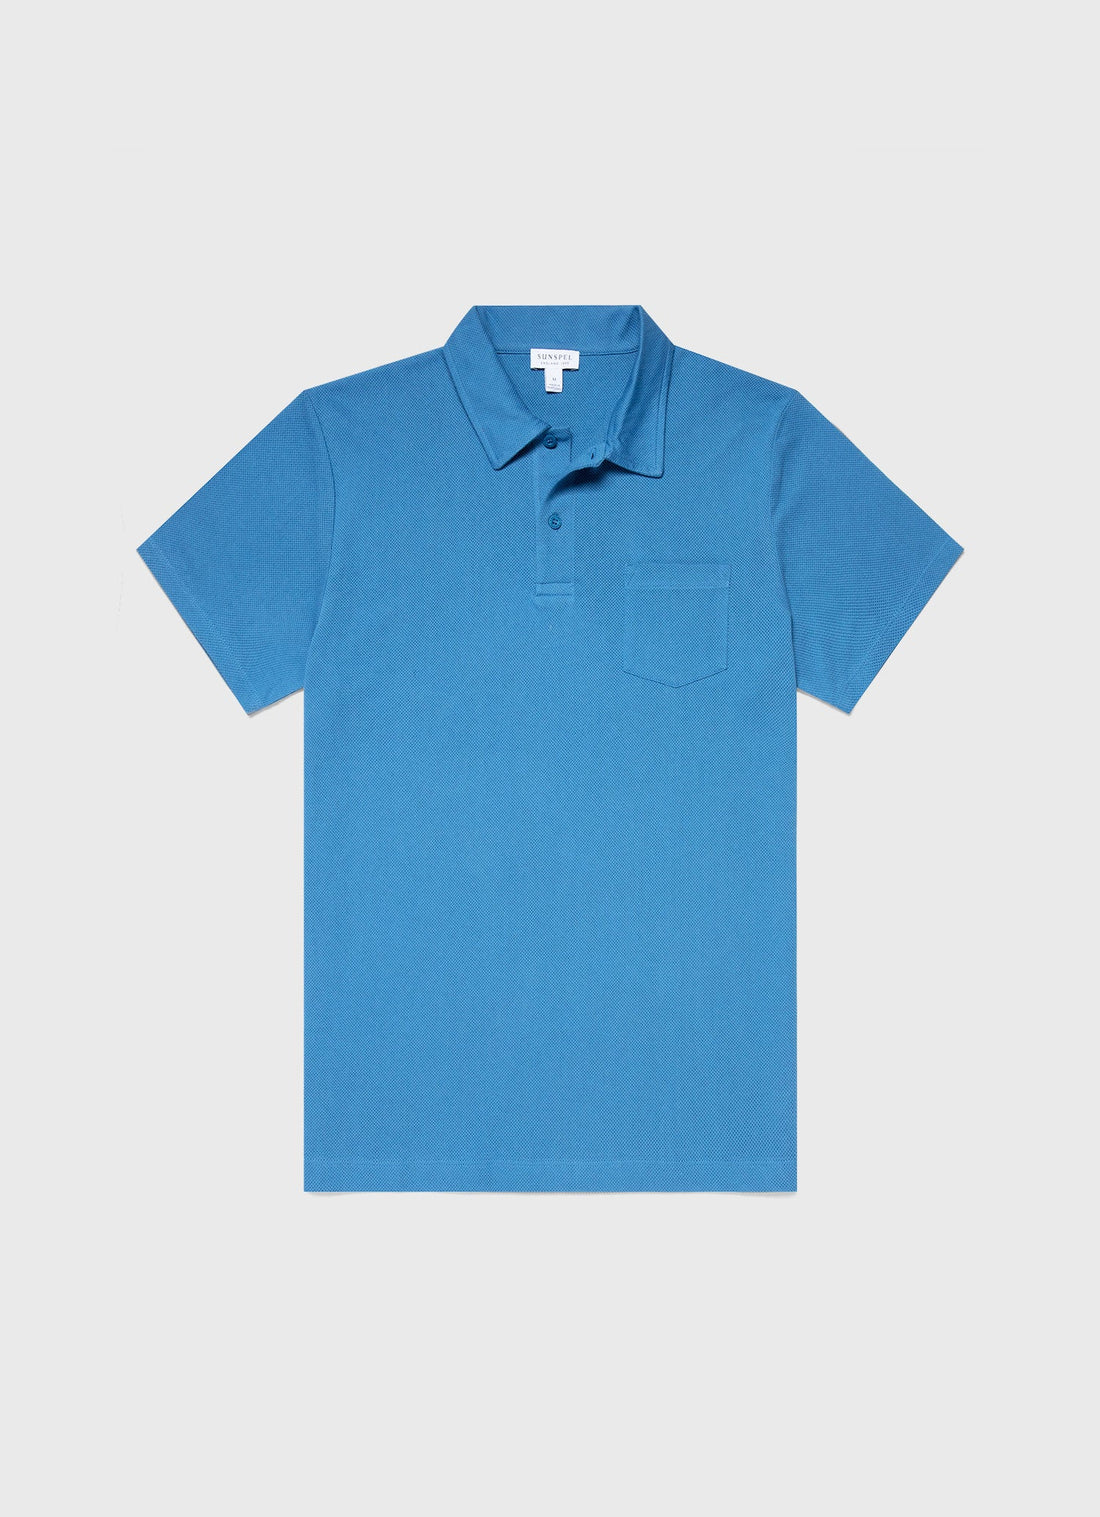 Men's Riviera Polo Shirt in Blue Jean